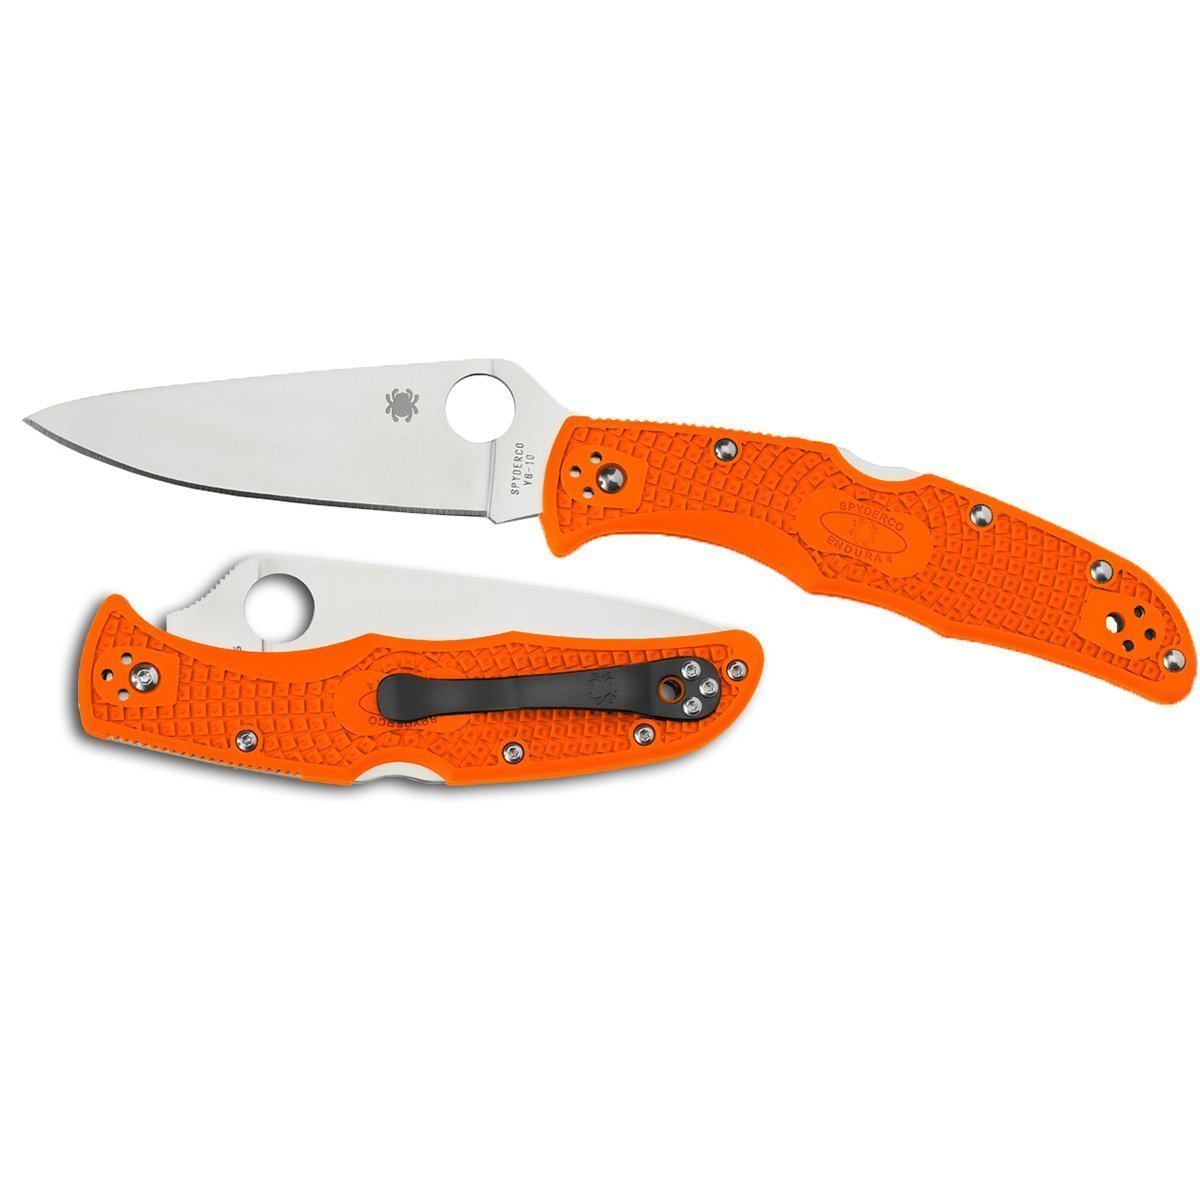 Spyderco Endura4 Lightweight Orange - Flat Ground Plain Blade Tactical Distributors Ltd New Zealand